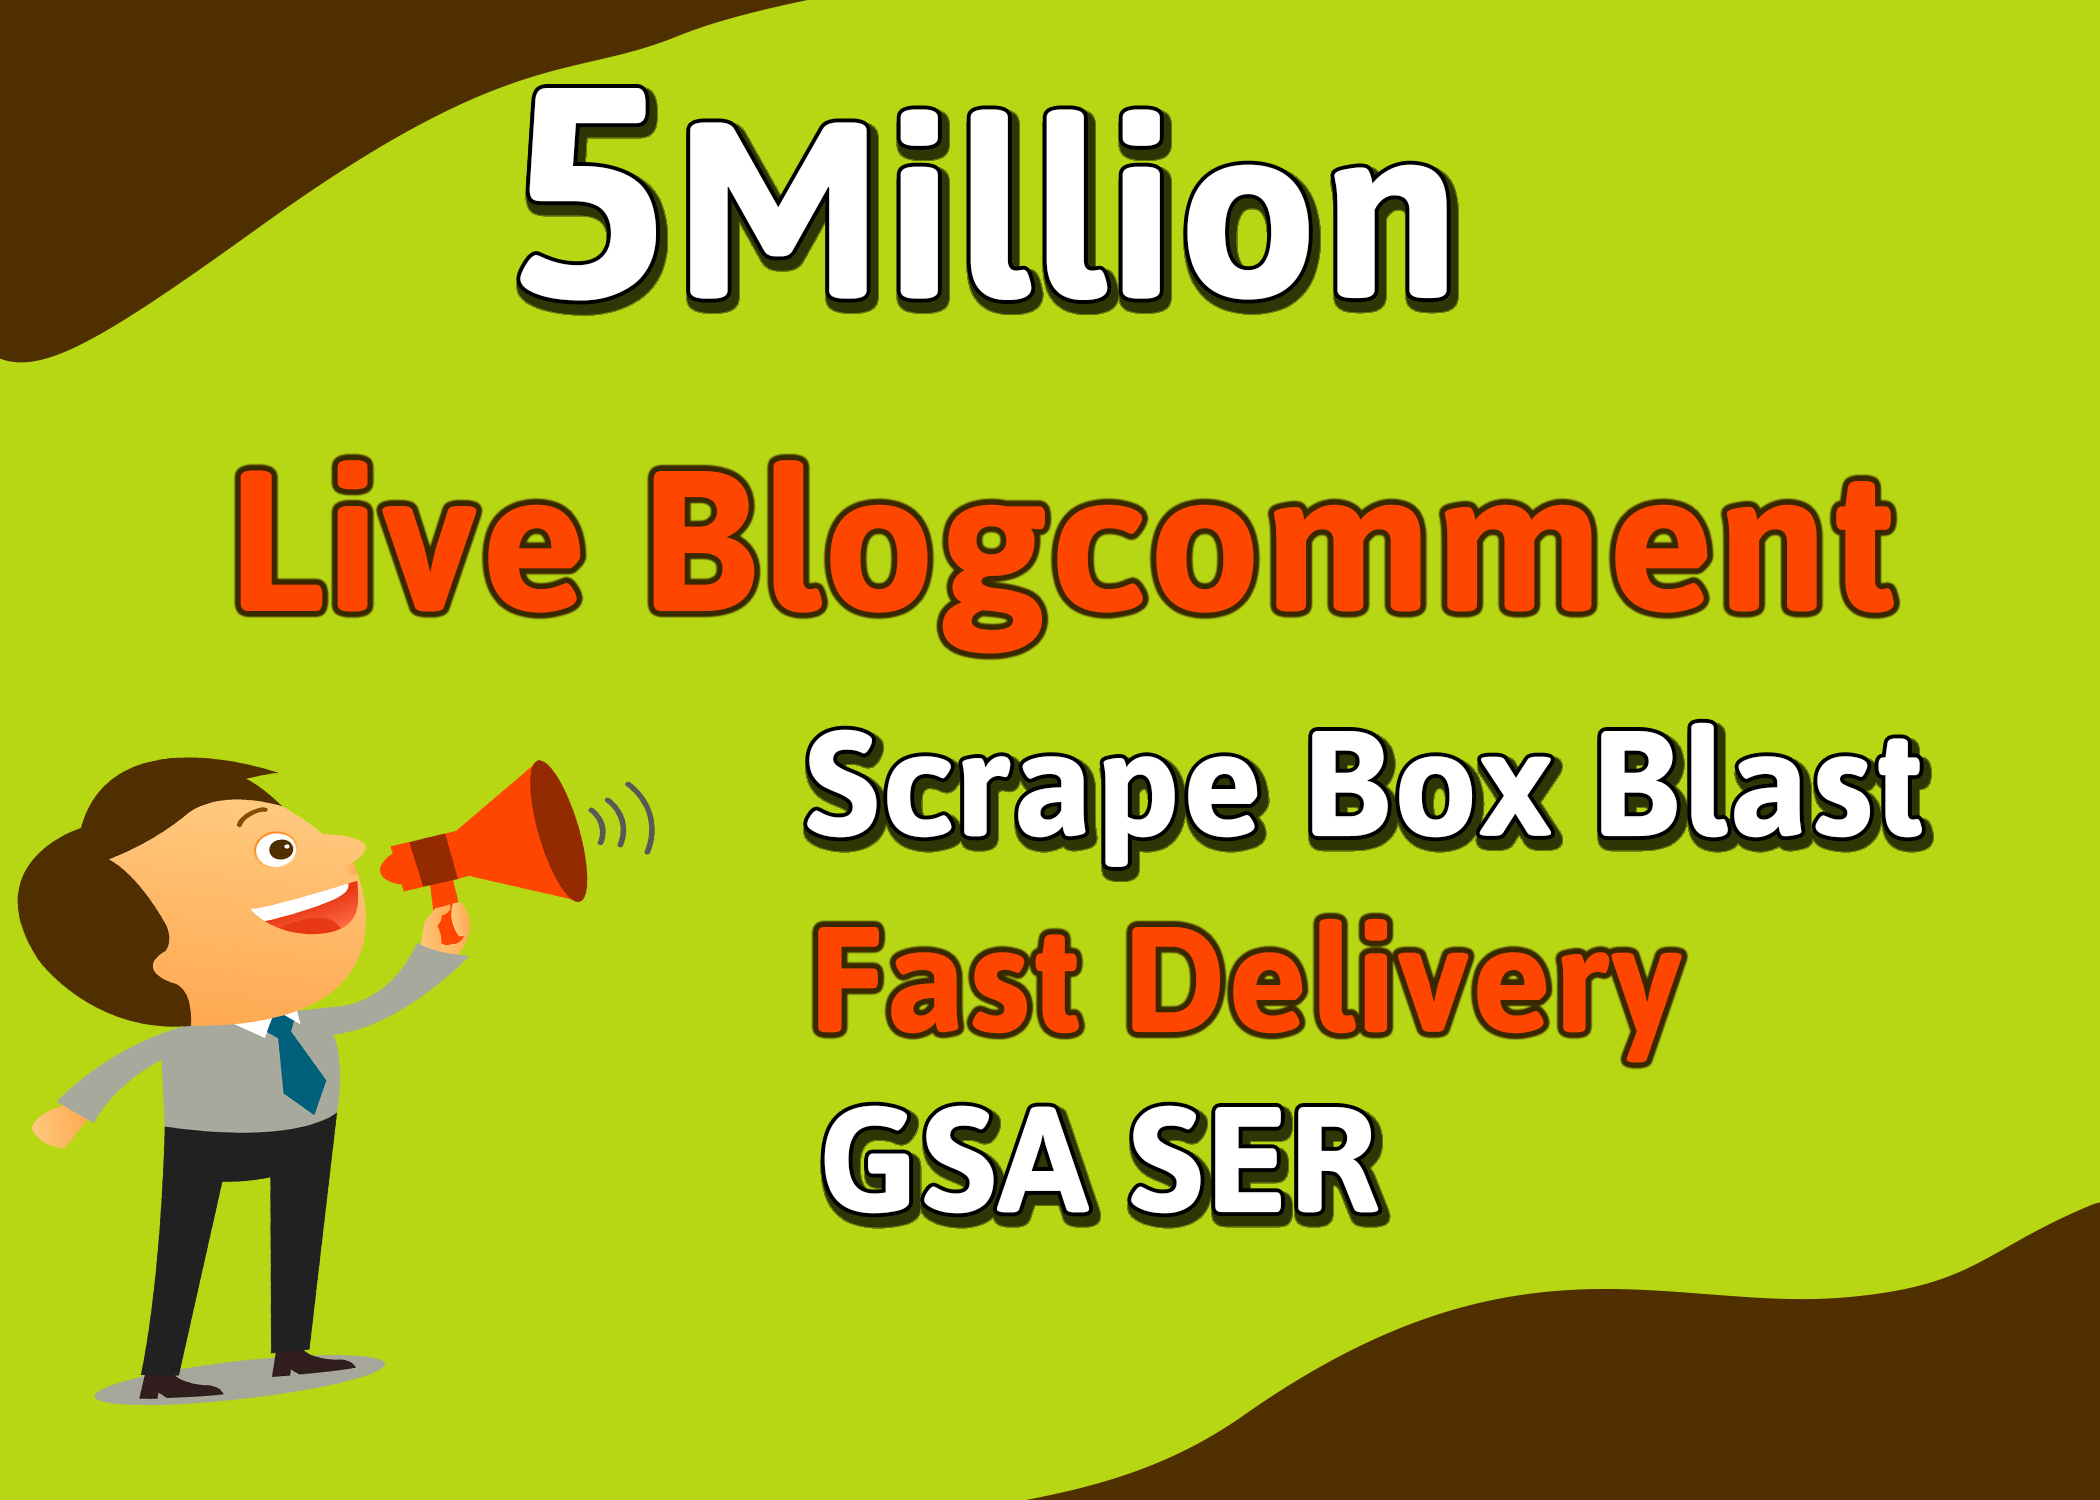 Create blast scrapebox 500,000 SEO blog comment backlinks